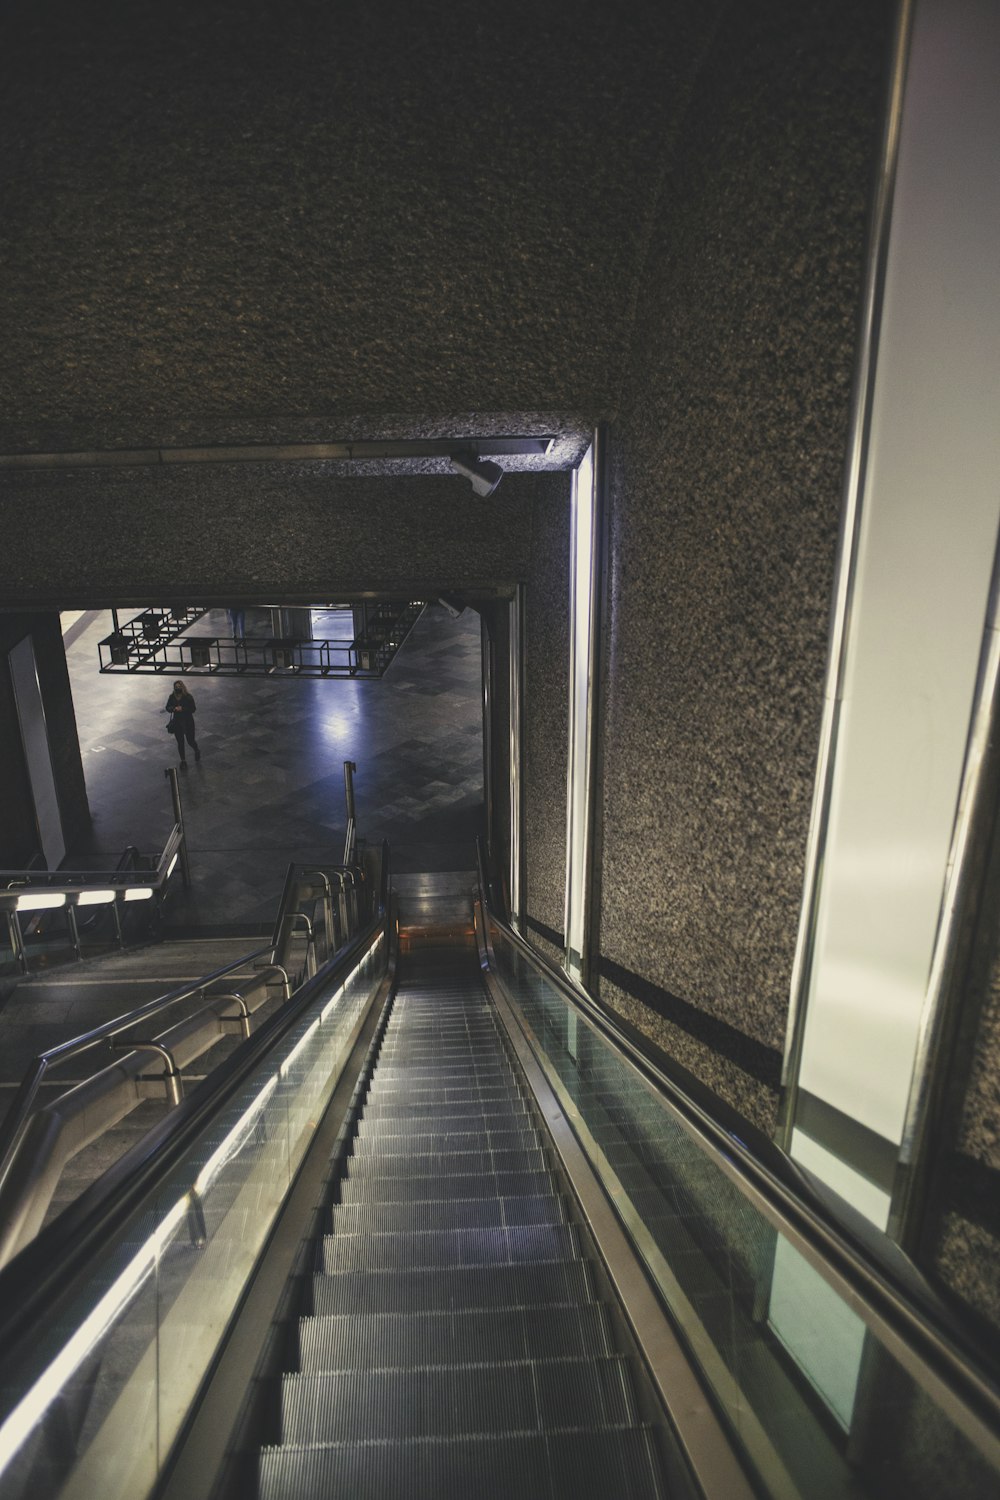 black and silver escalator in a room